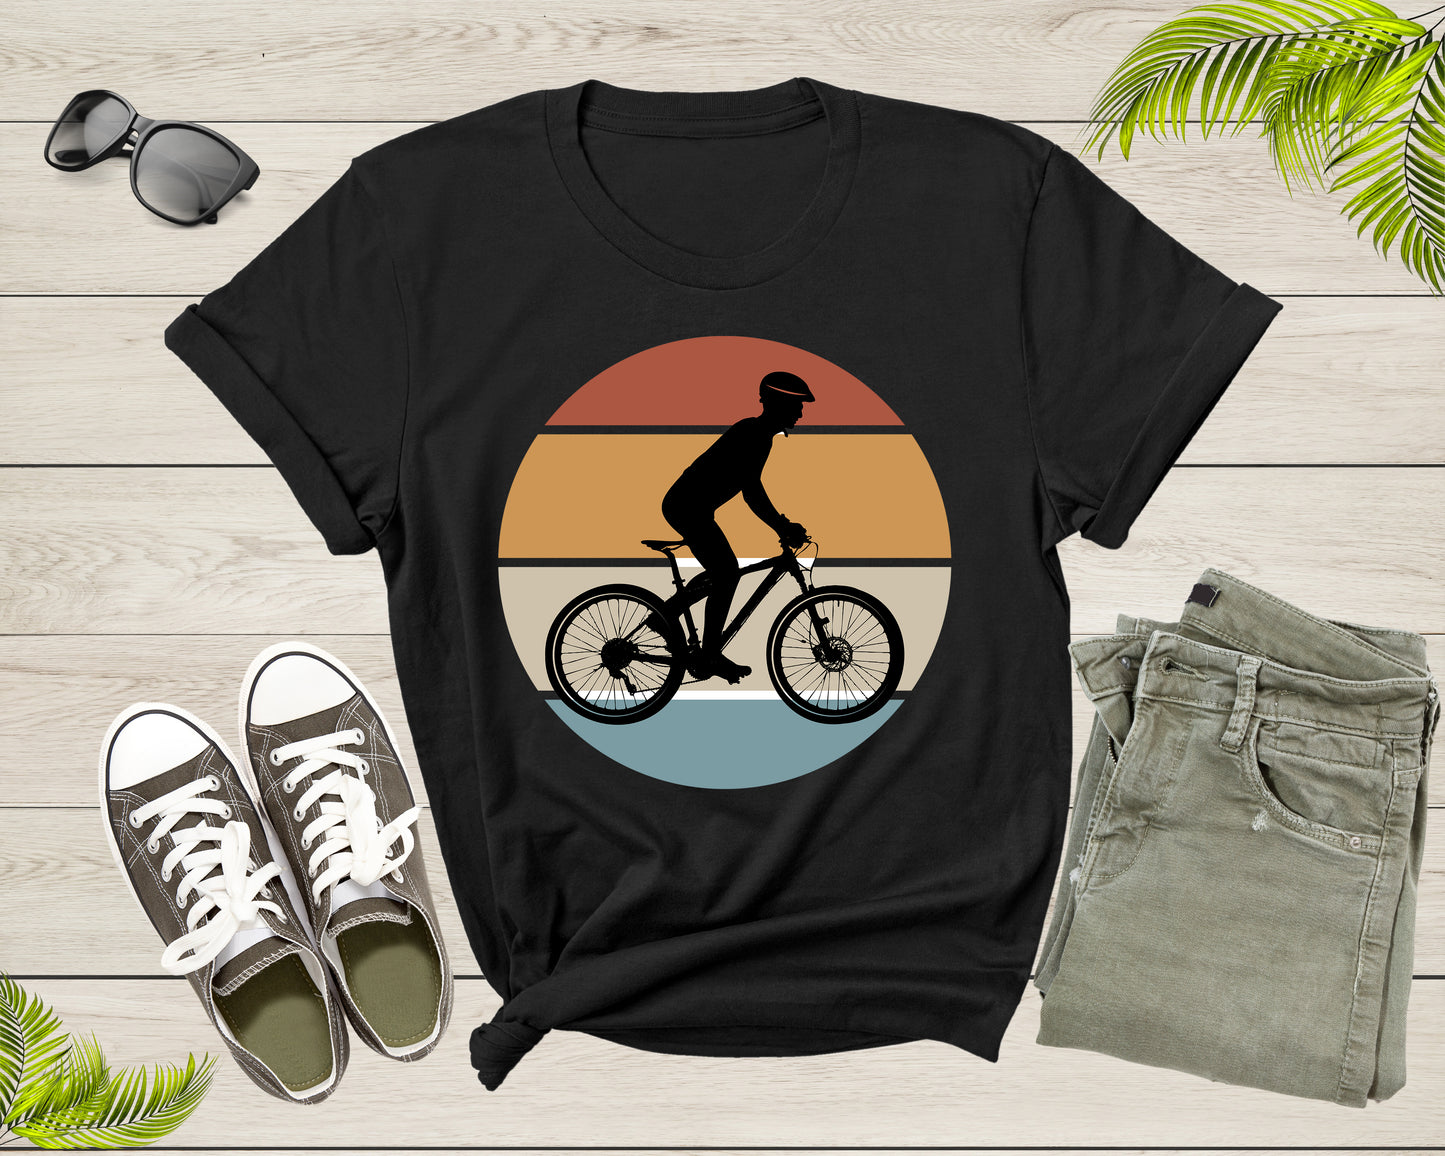 Retro Bicycle Lover Gift Idea Shirt Women Men Kids Boys Girls Bicycle Themed Tshirt Design Bike Lover Birthday Present Dad Mom T-shirt